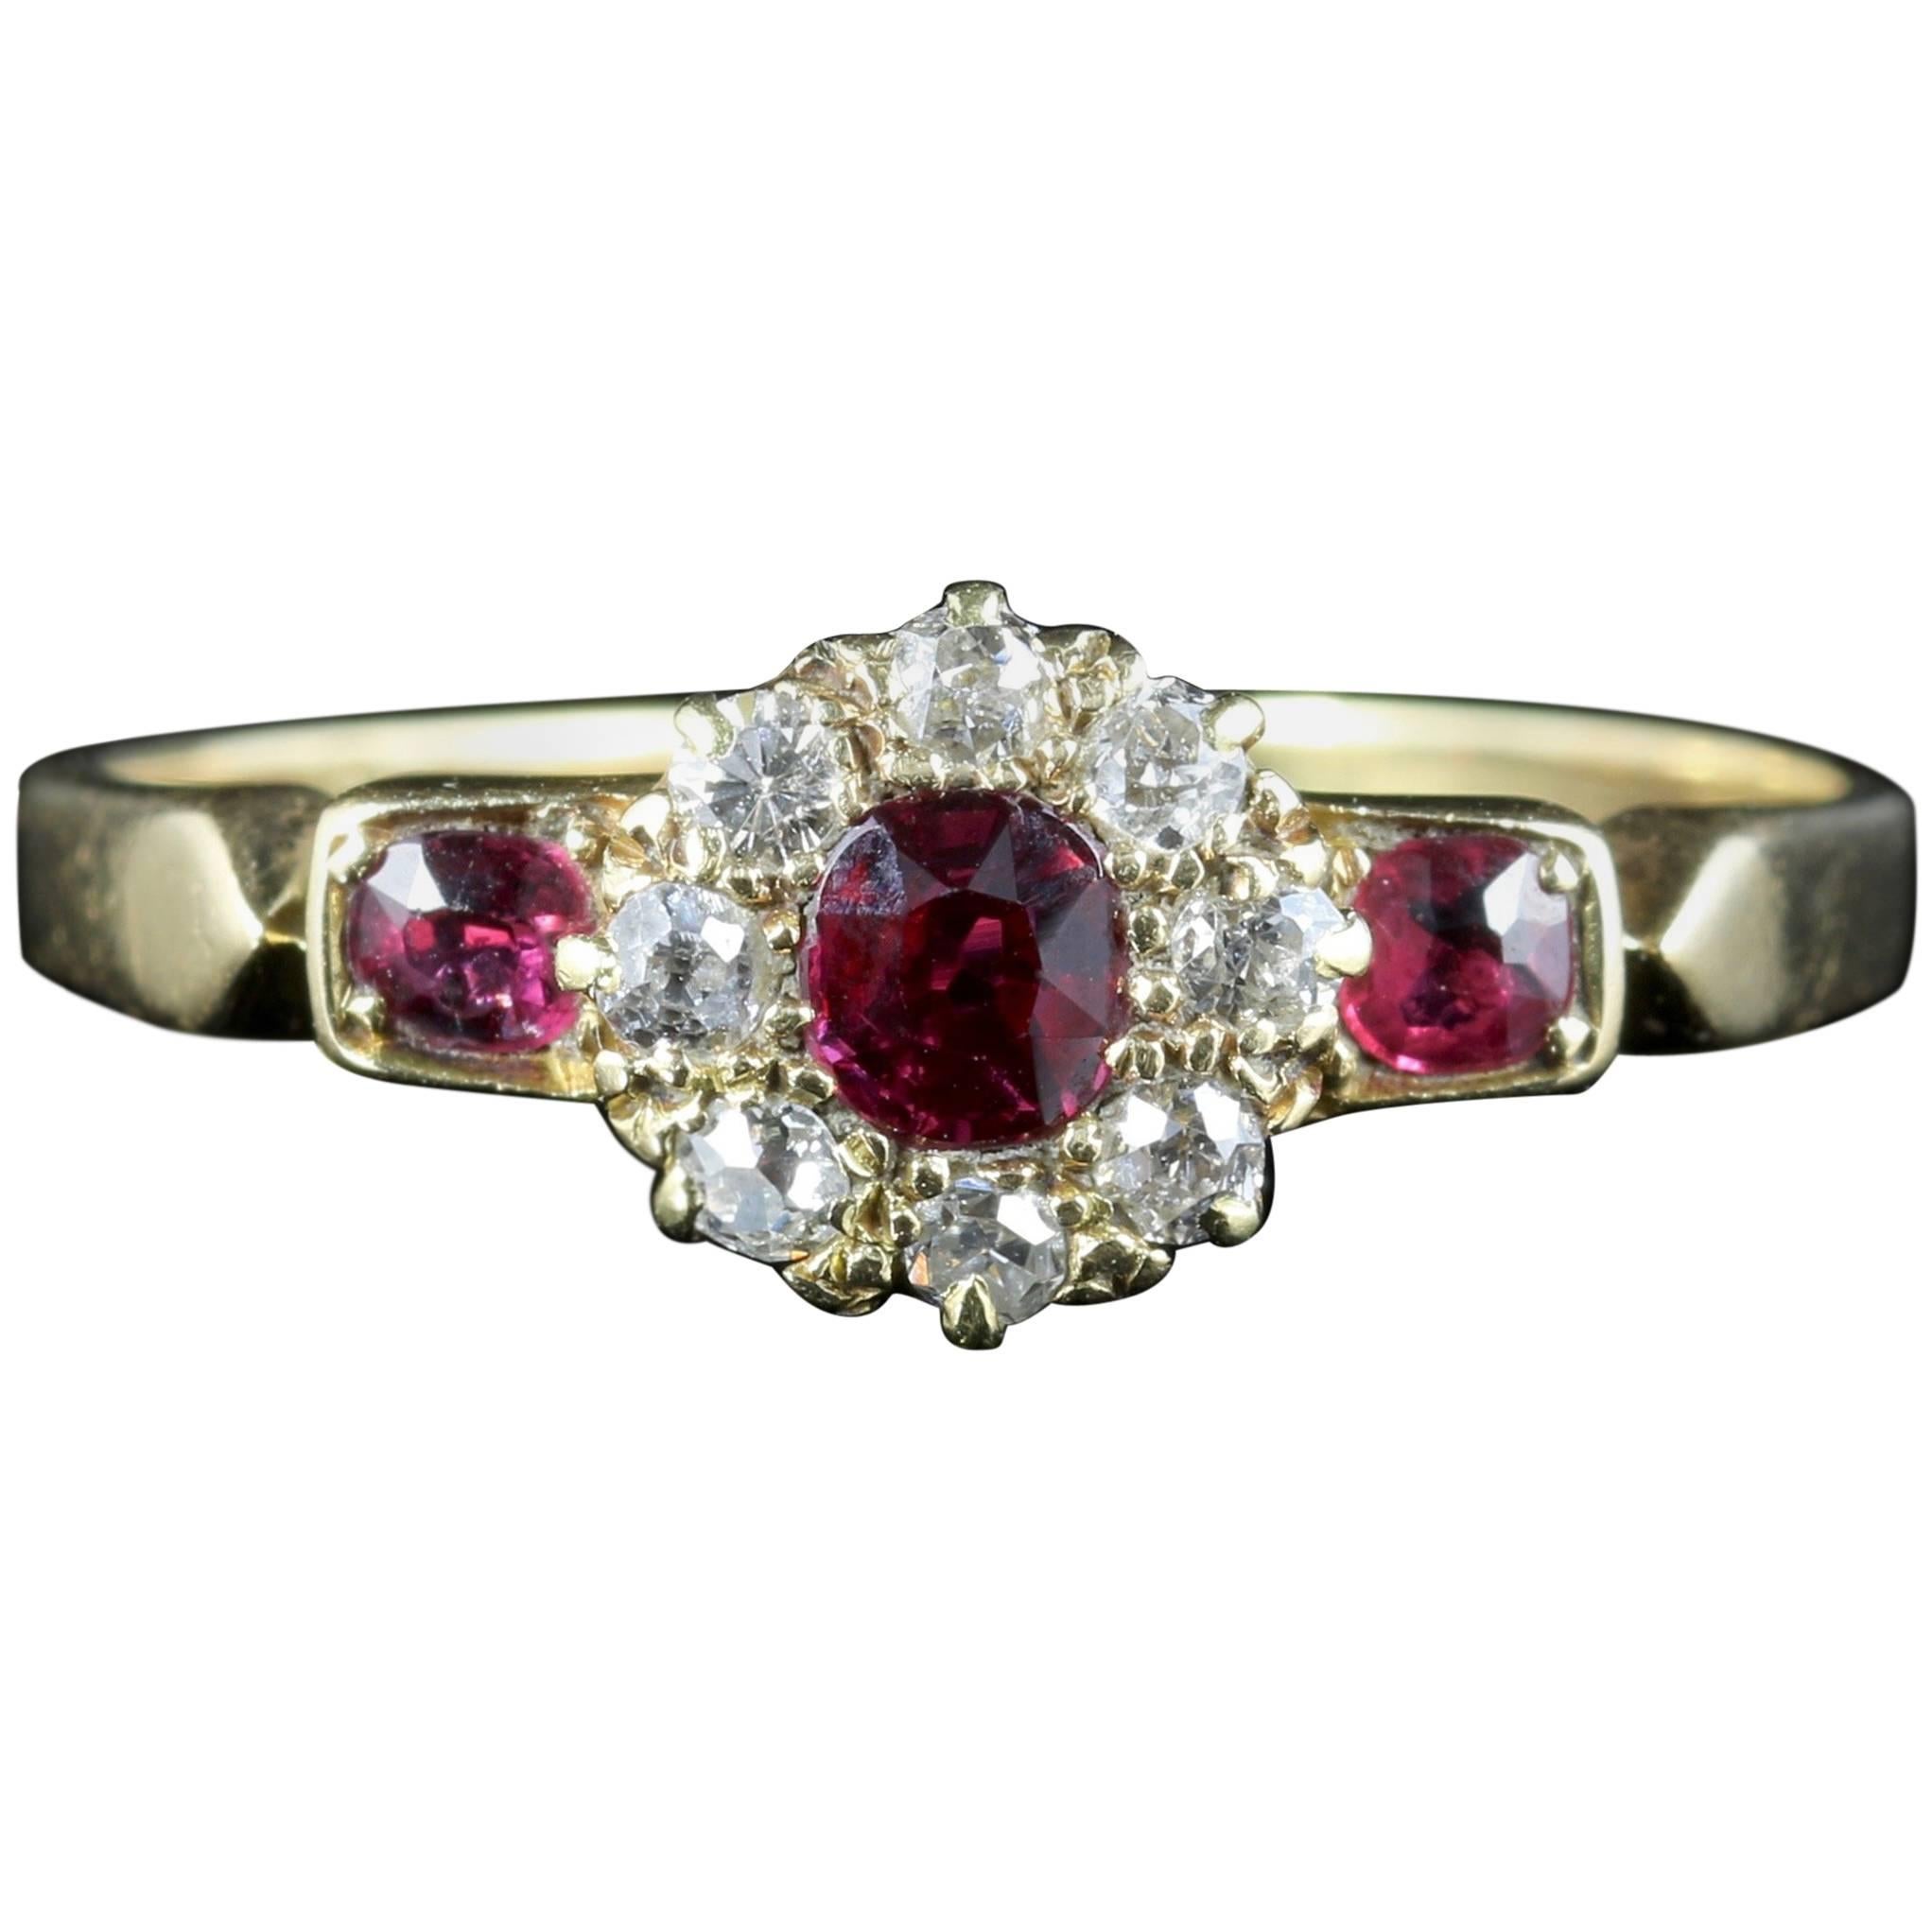 Antique Victorian Ruby Diamond Cluster Ring 18 Carat Gold, circa 1880